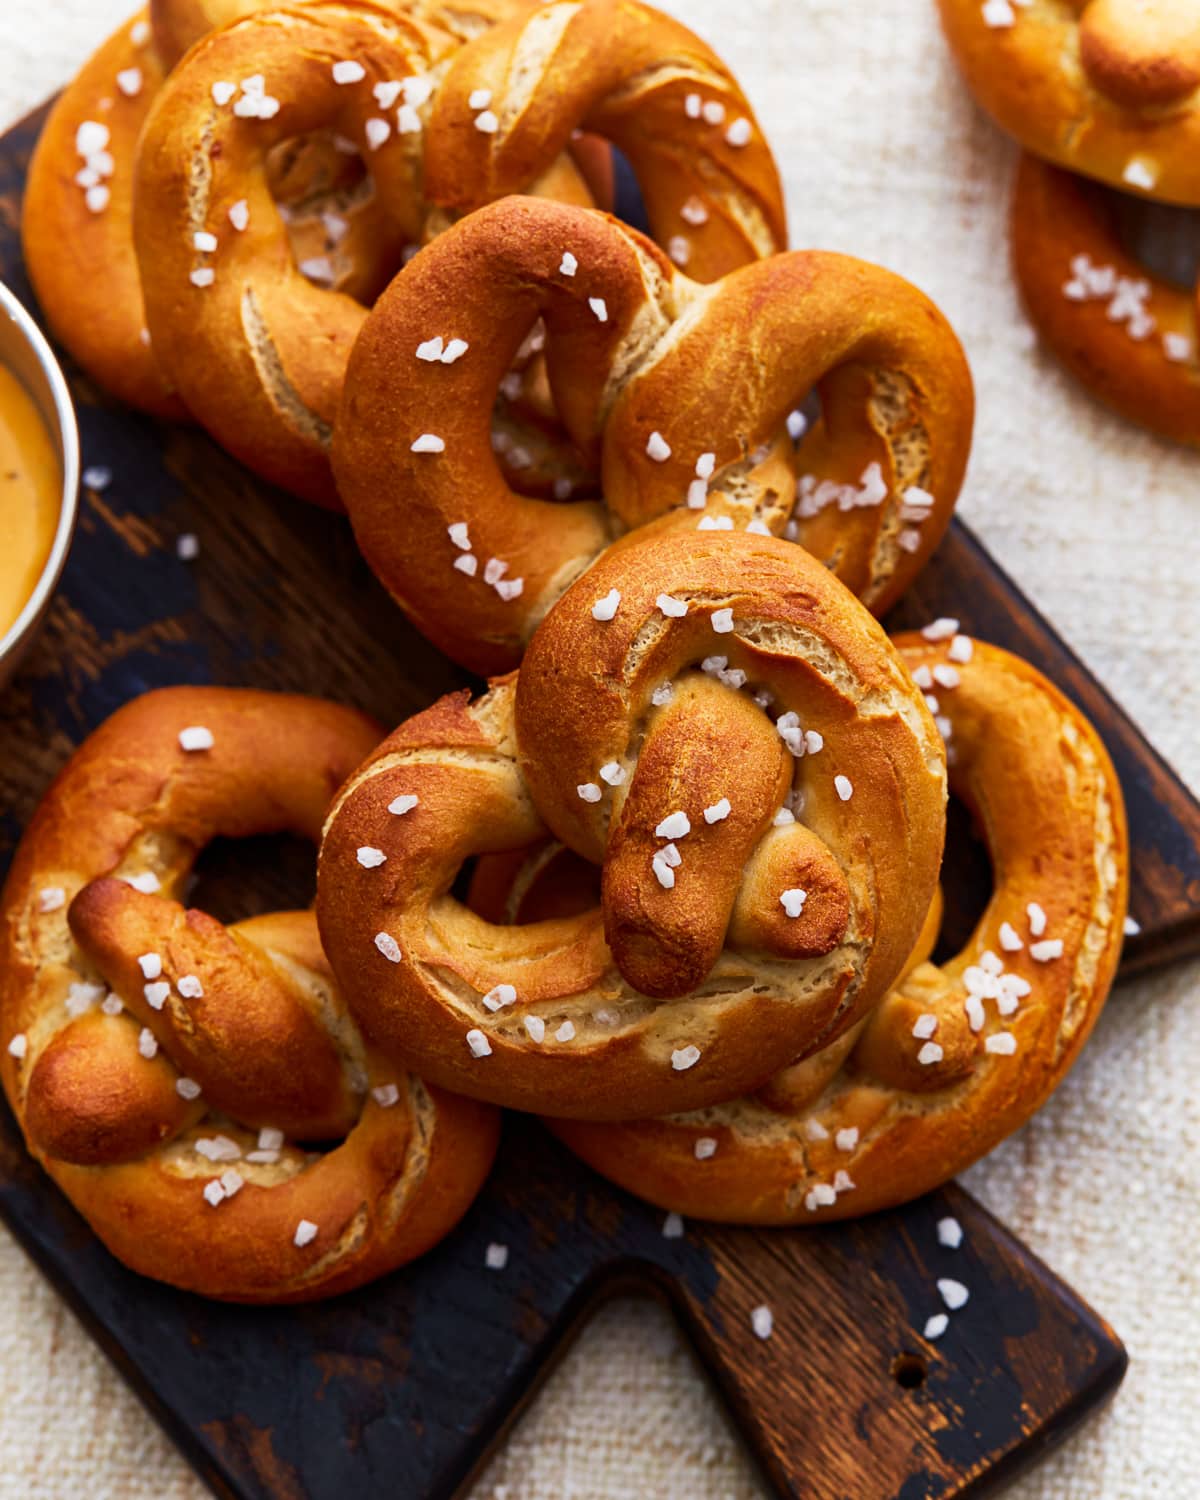 Gluten-free soft pretzels on a wooden cutting board.